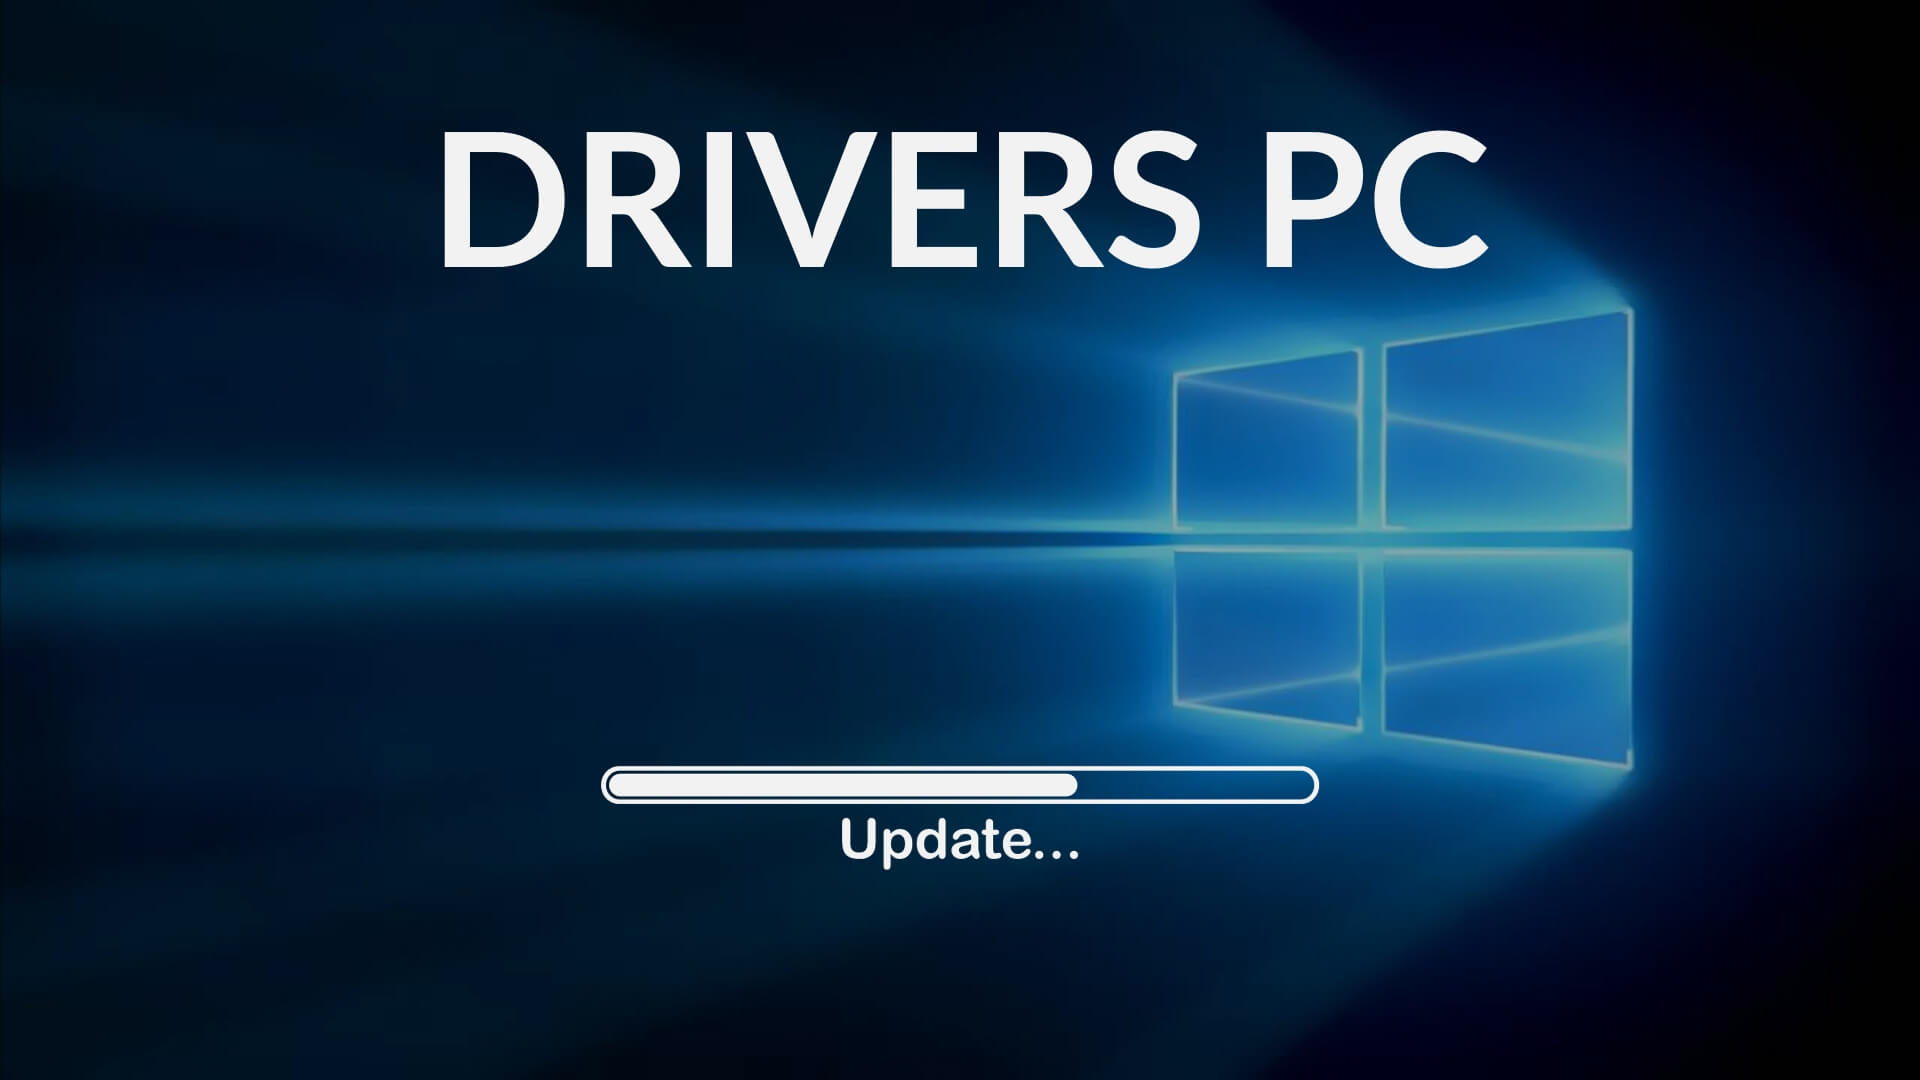 update drivers windows 10